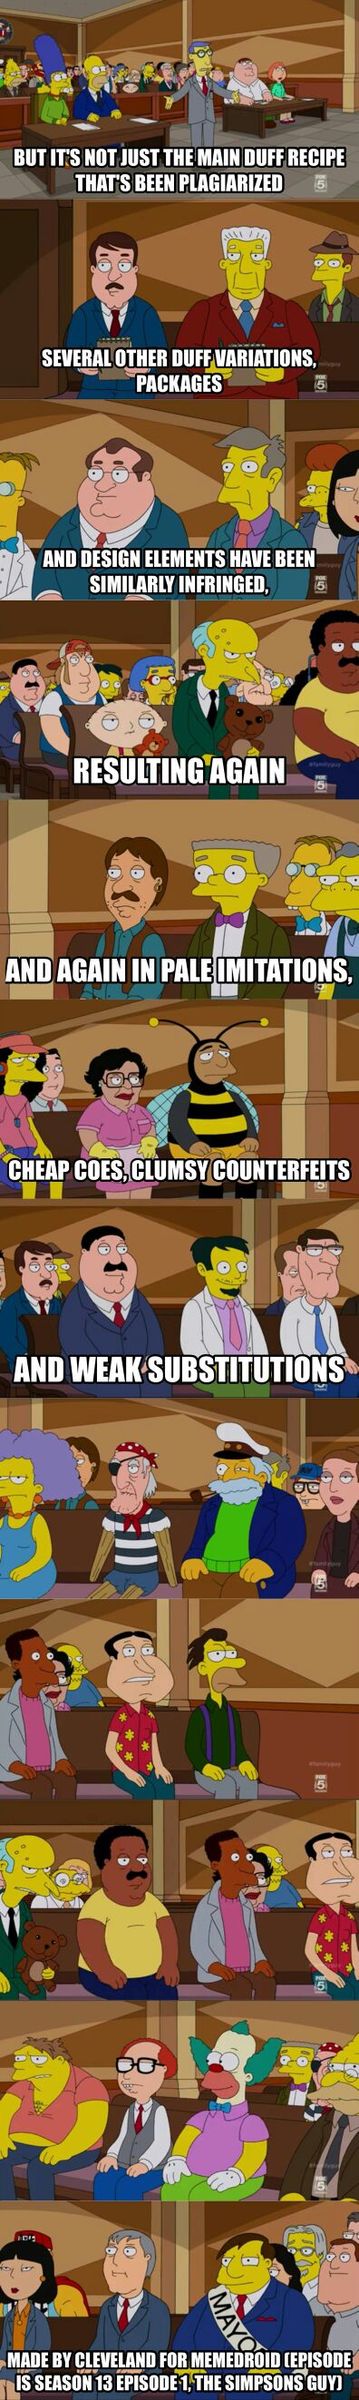 The Simpsons Guy - meme